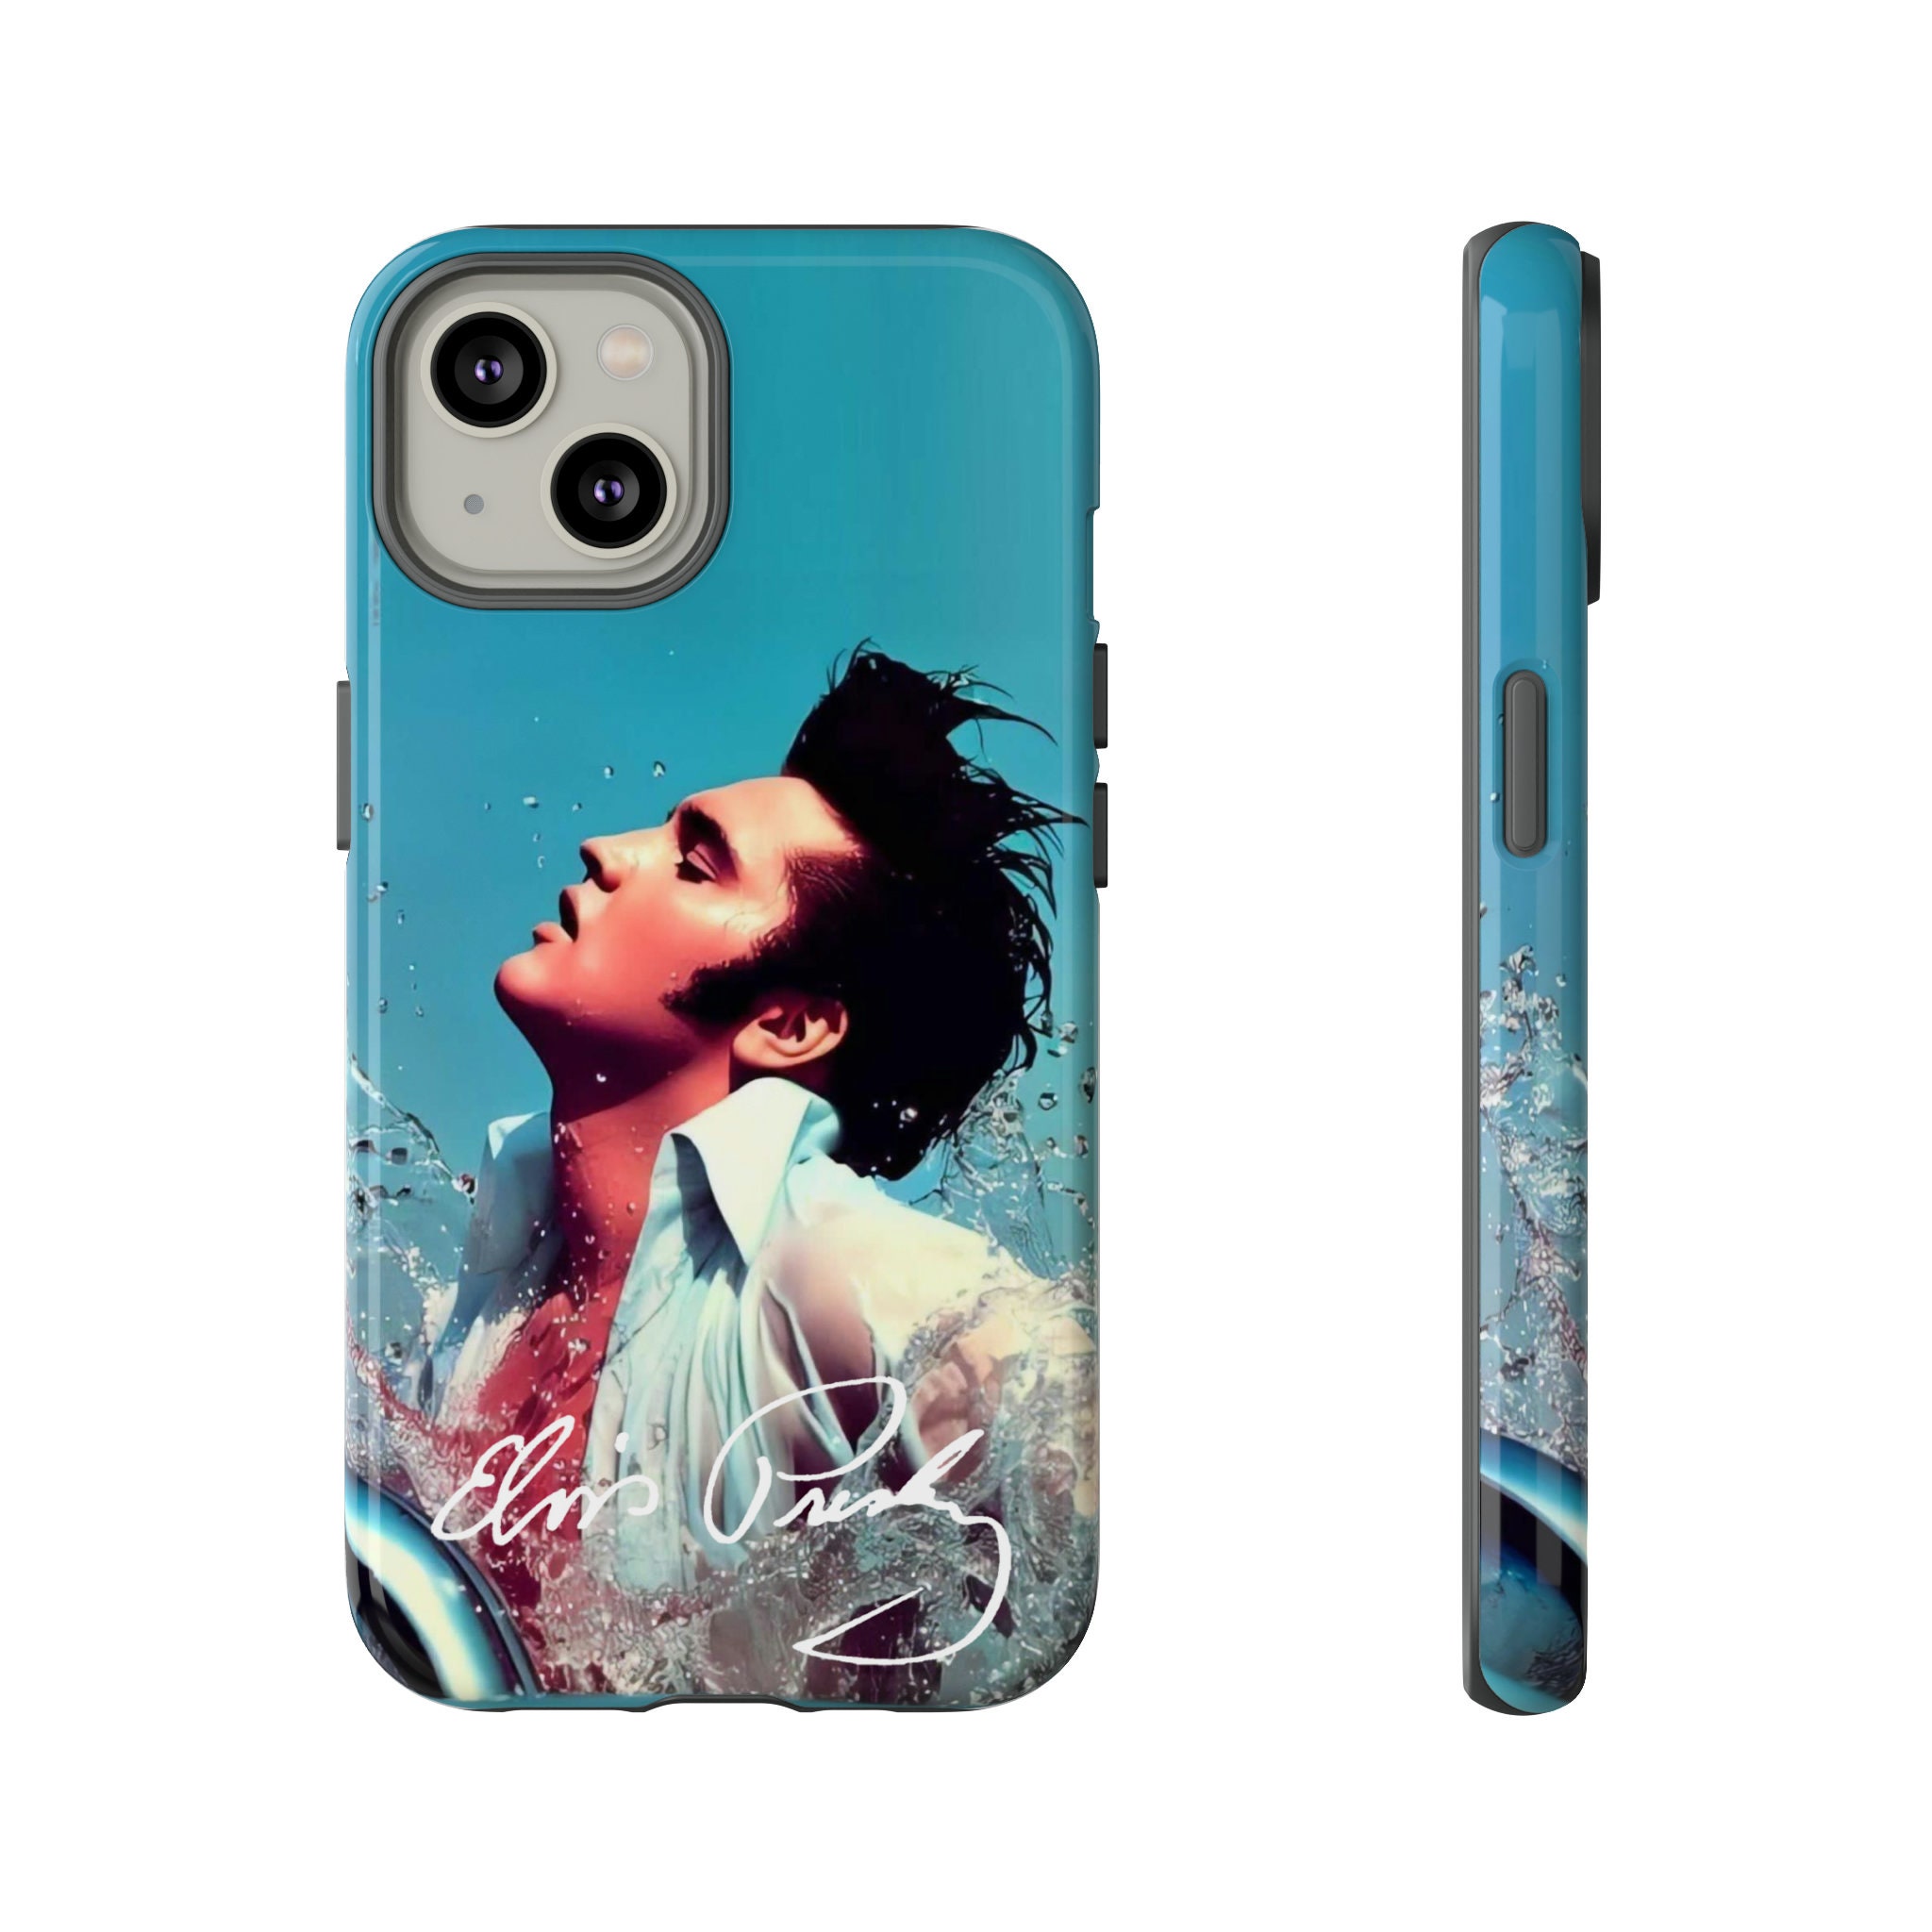 Elvis Presley Portrait Phone Cases